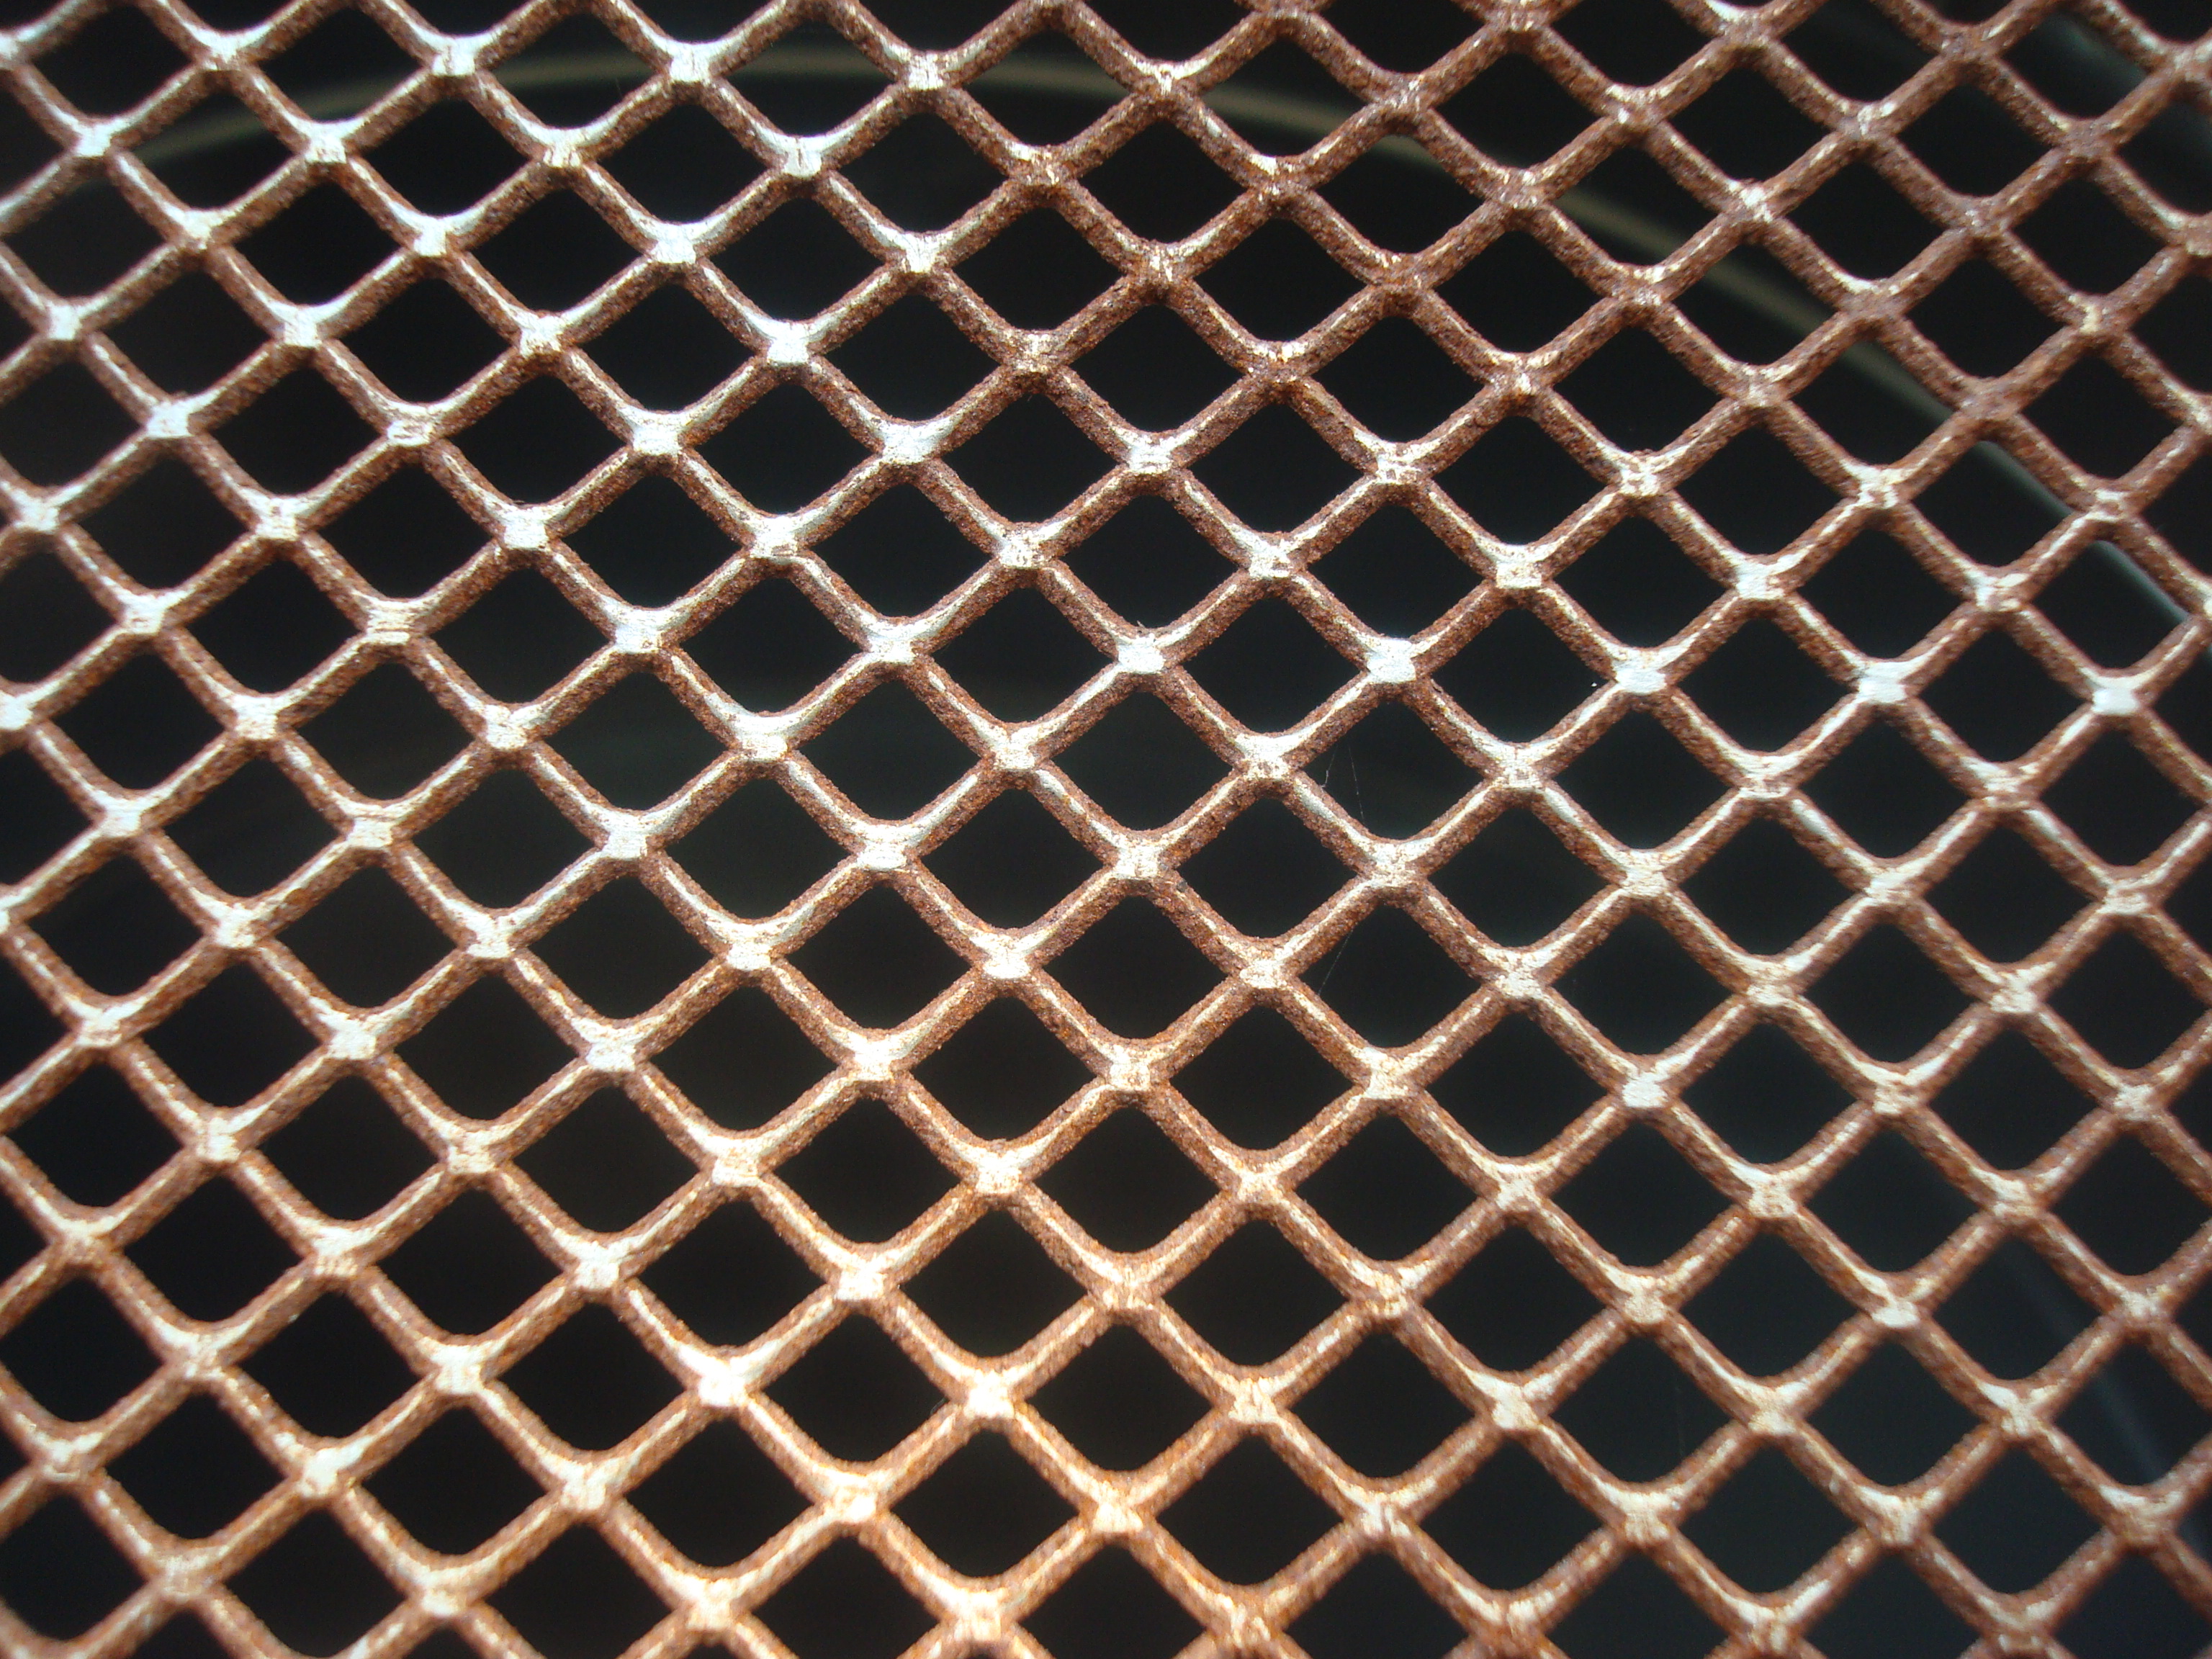 Rusted metal grid texture, Grid, Grunge, Metal, Rust, HQ Photo